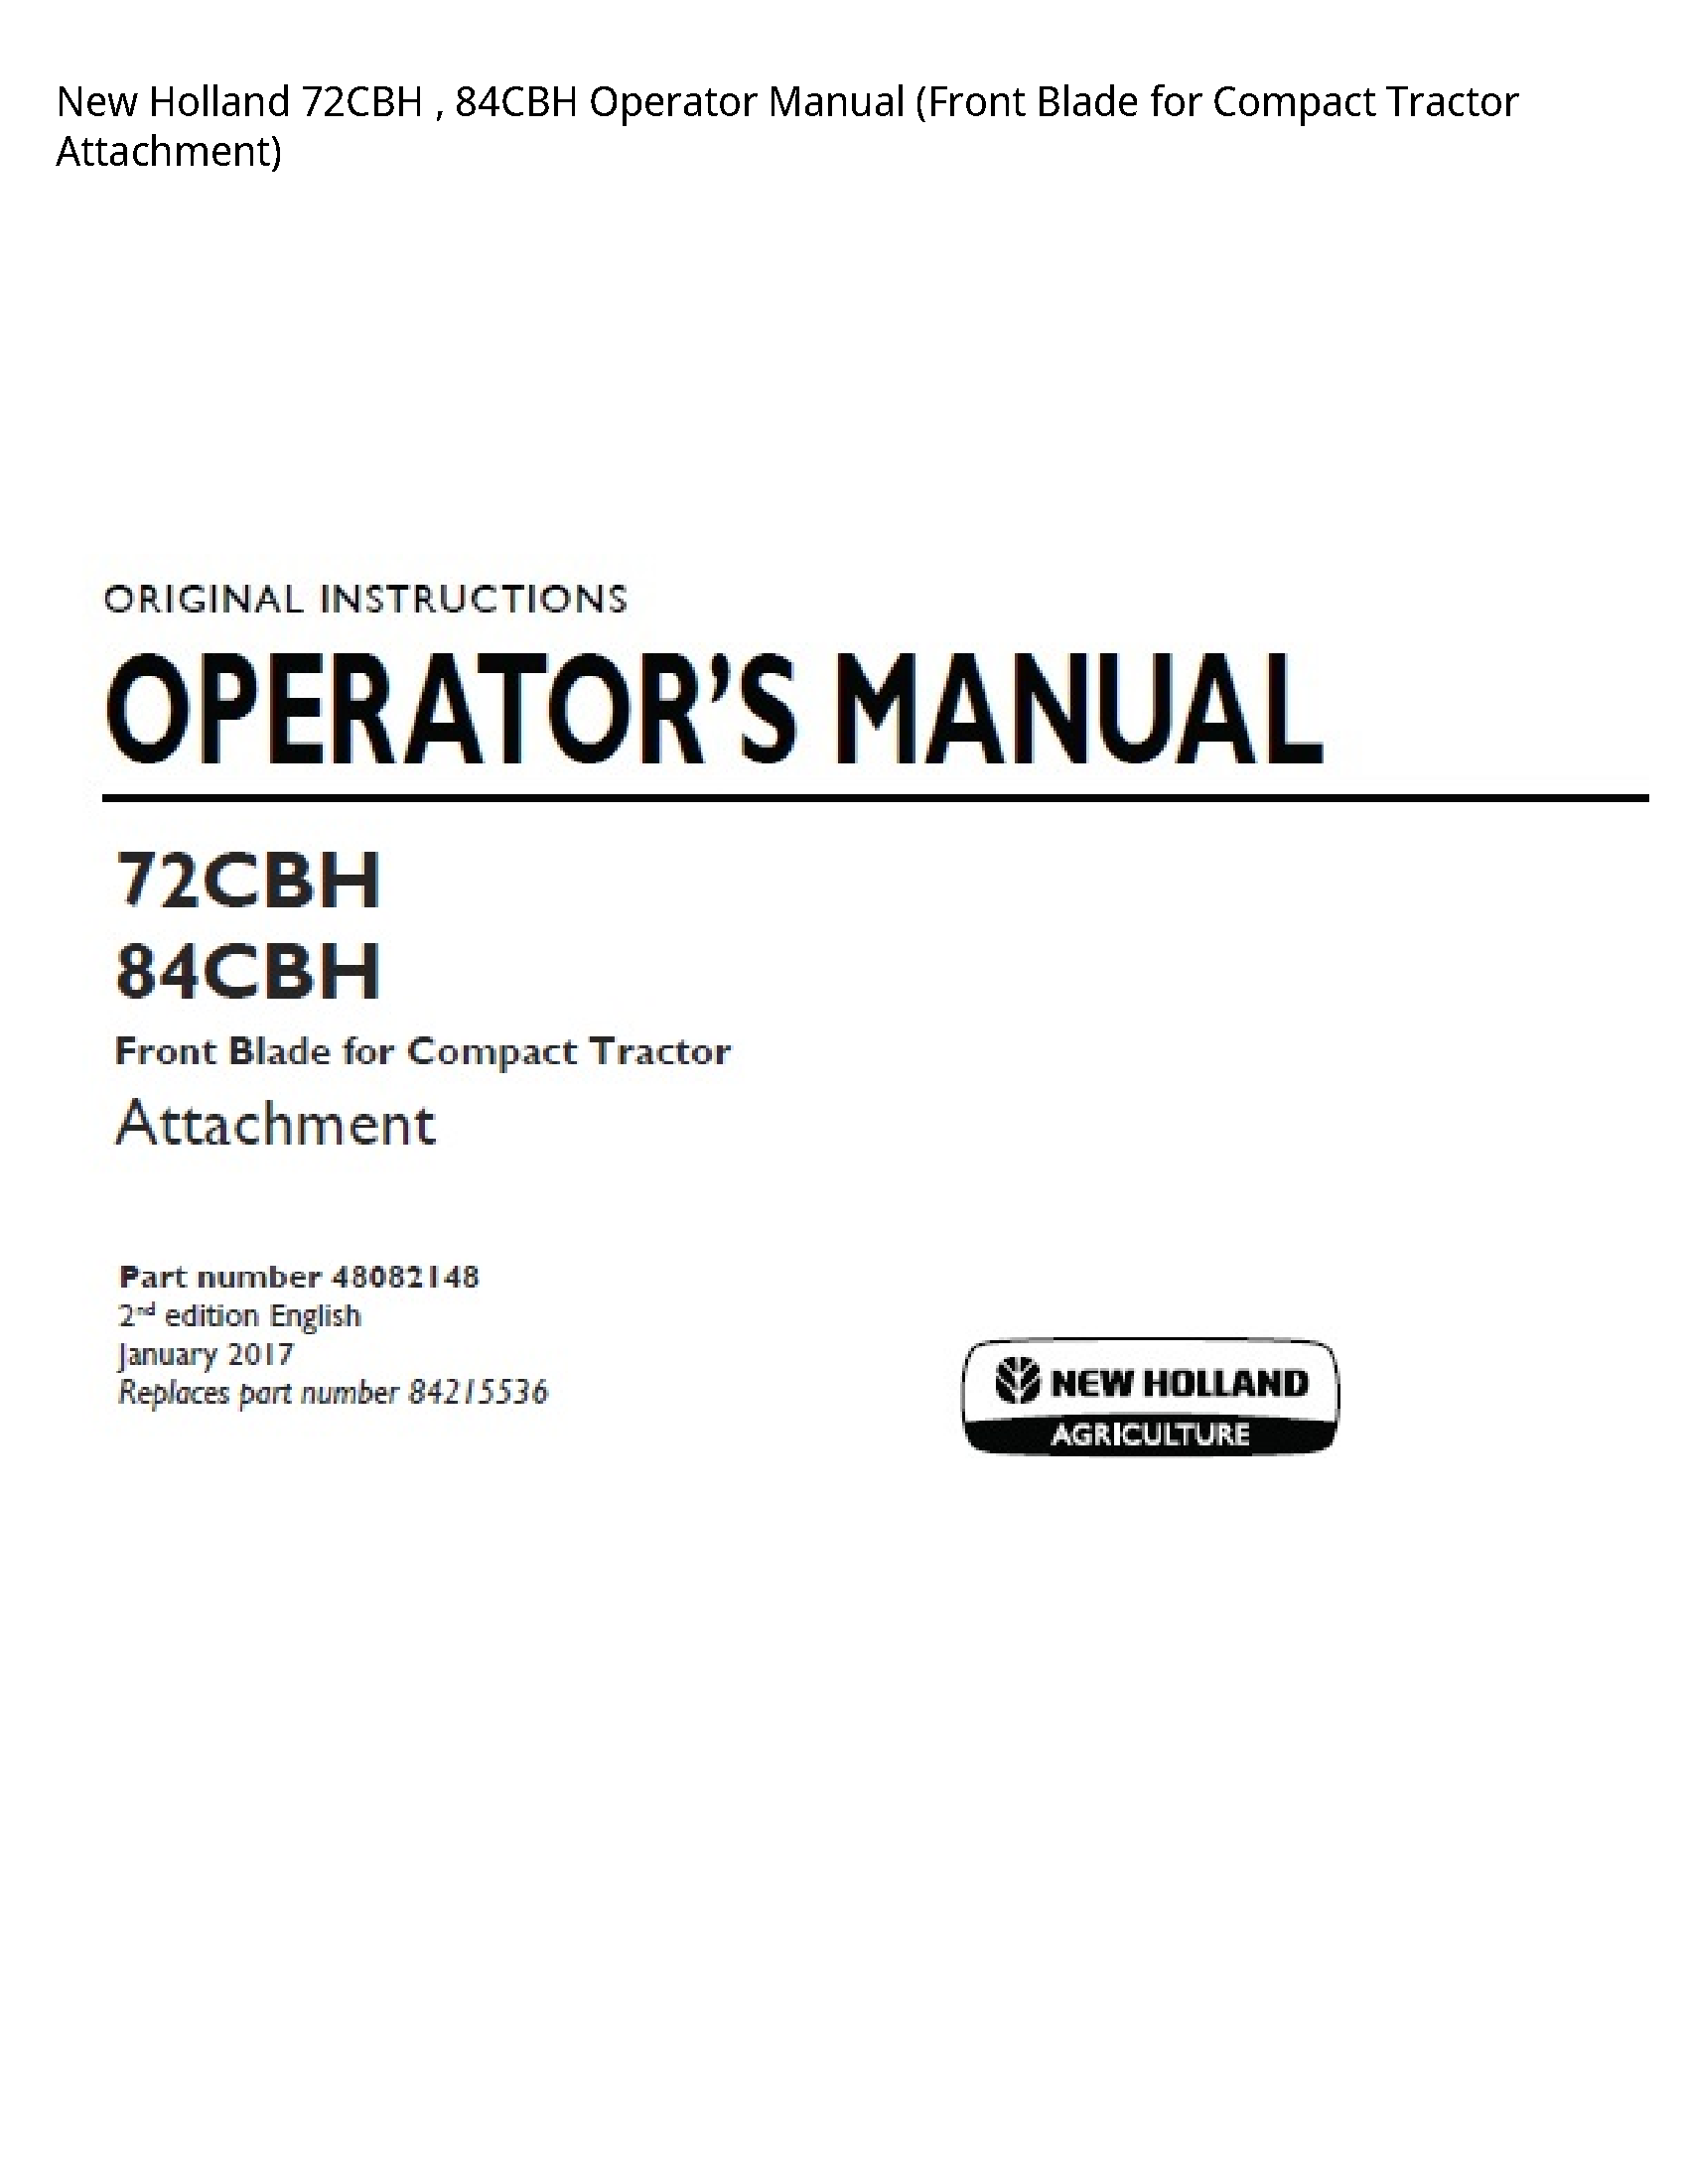 New Holland 72CBH Operator manual